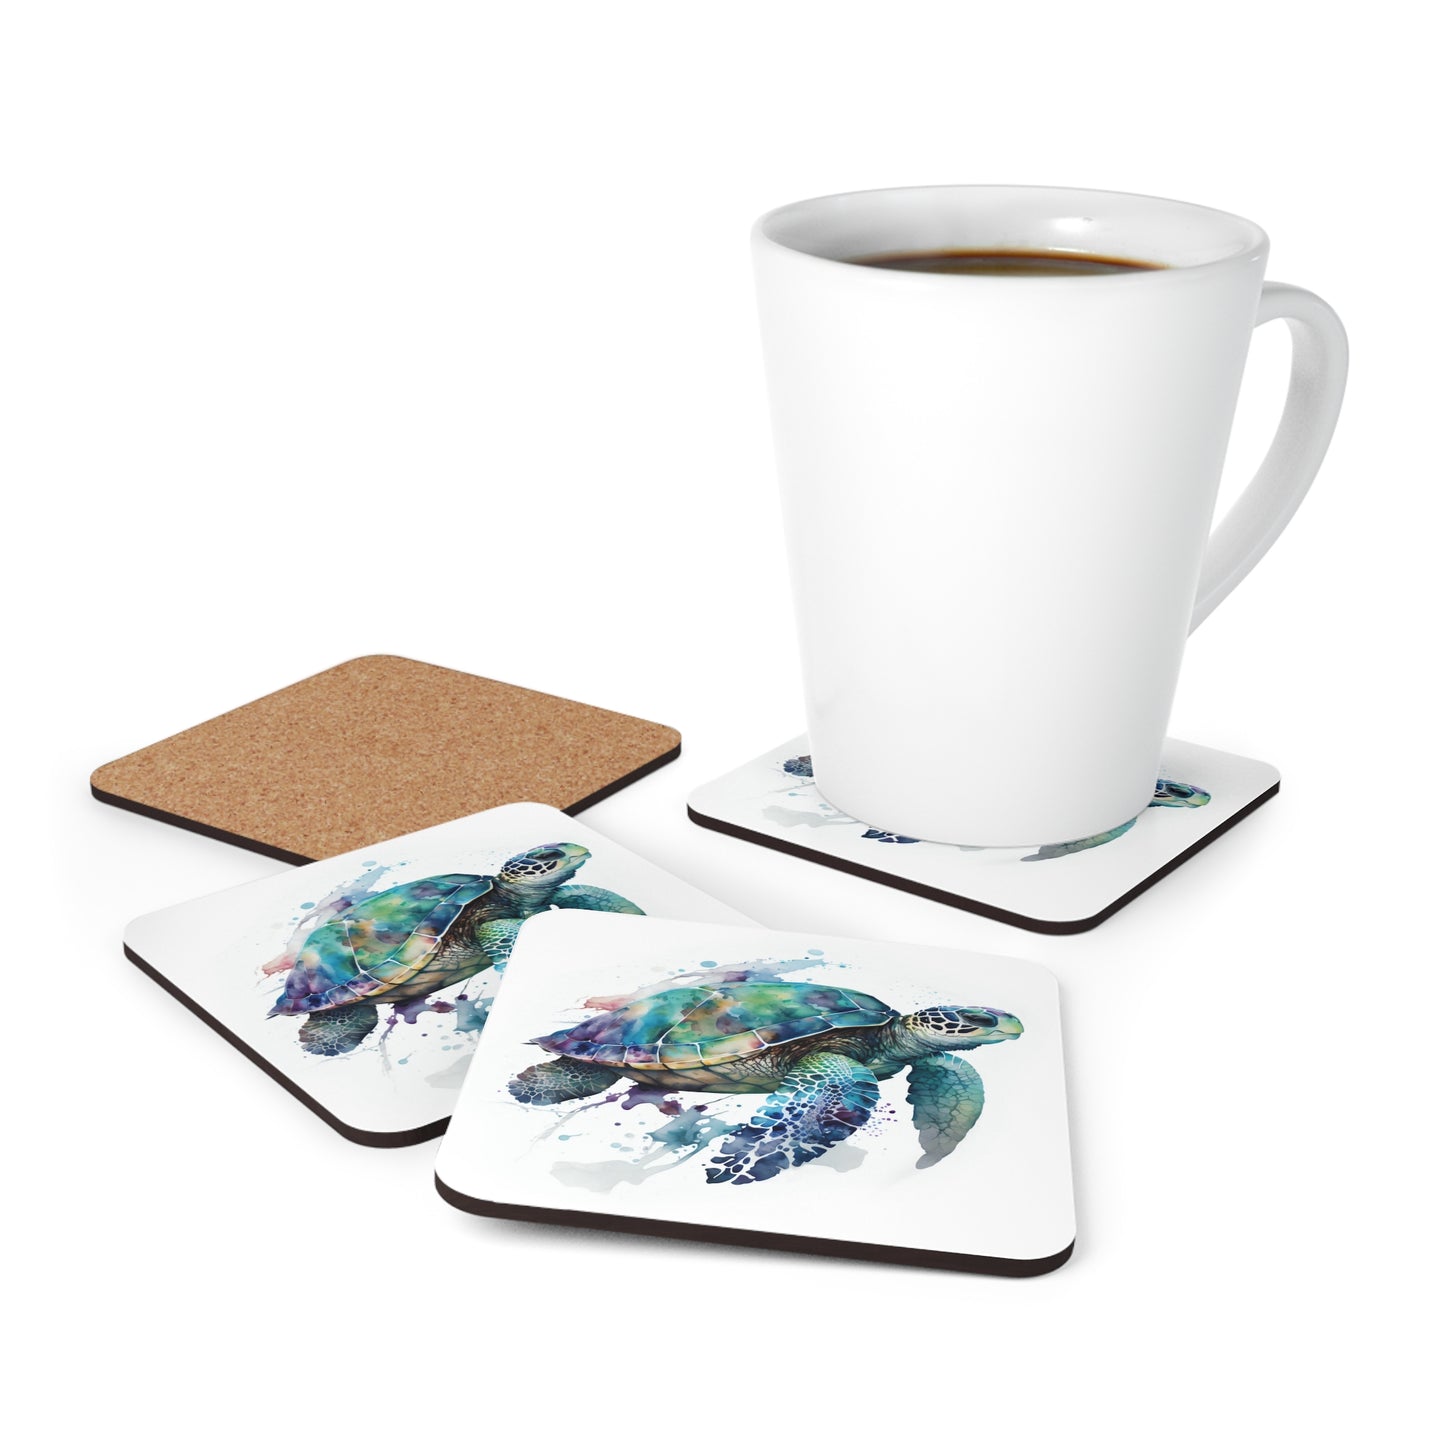 Watercolor Sea Turtle Coaster Set of 4, Coffee Table Decor, Square Coasters, Drink Coaster, MDF Top, Cork Bottom, Housewarming Gift